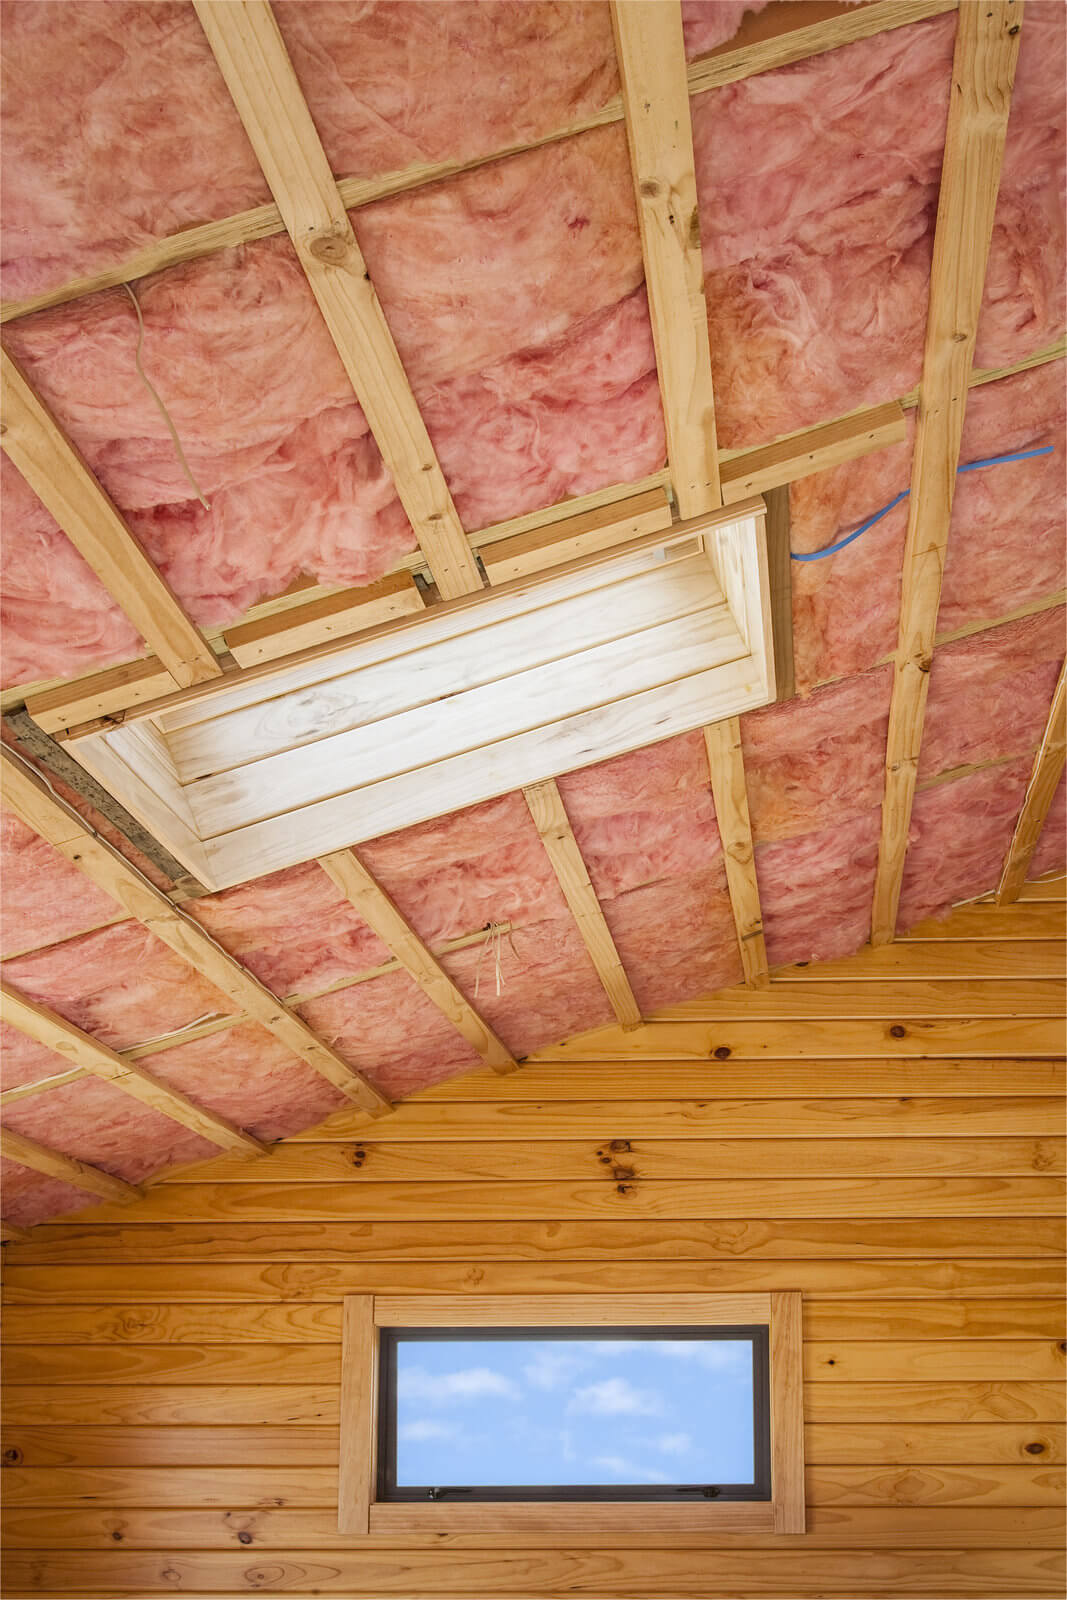 is fiberglass insulation safe?